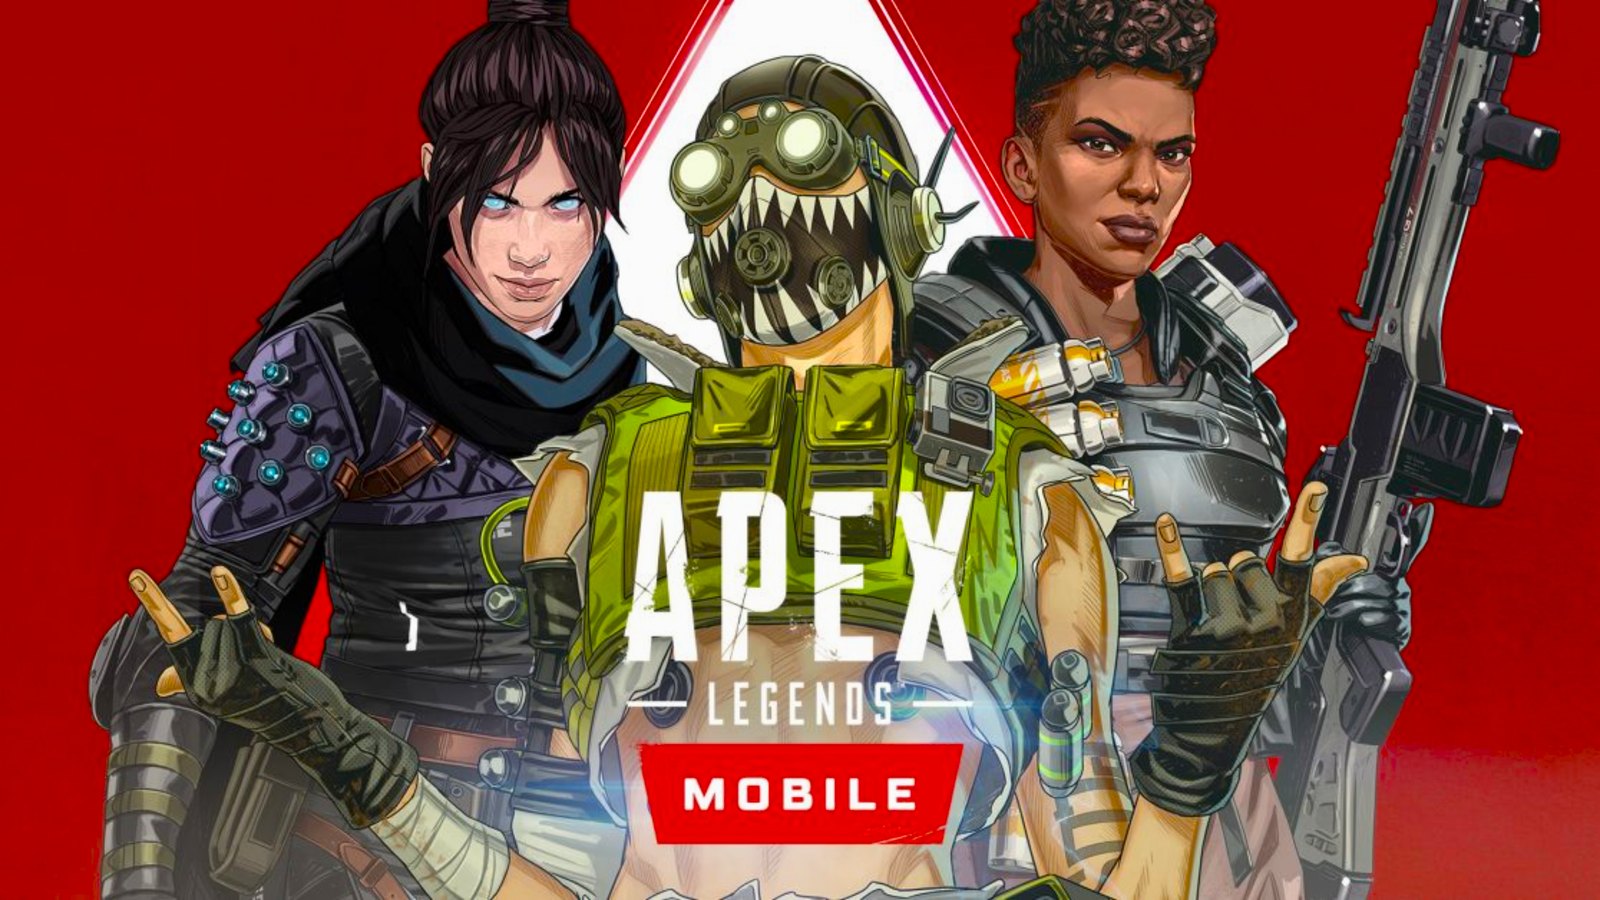 How to fix Apex Legends Mobile error code 201